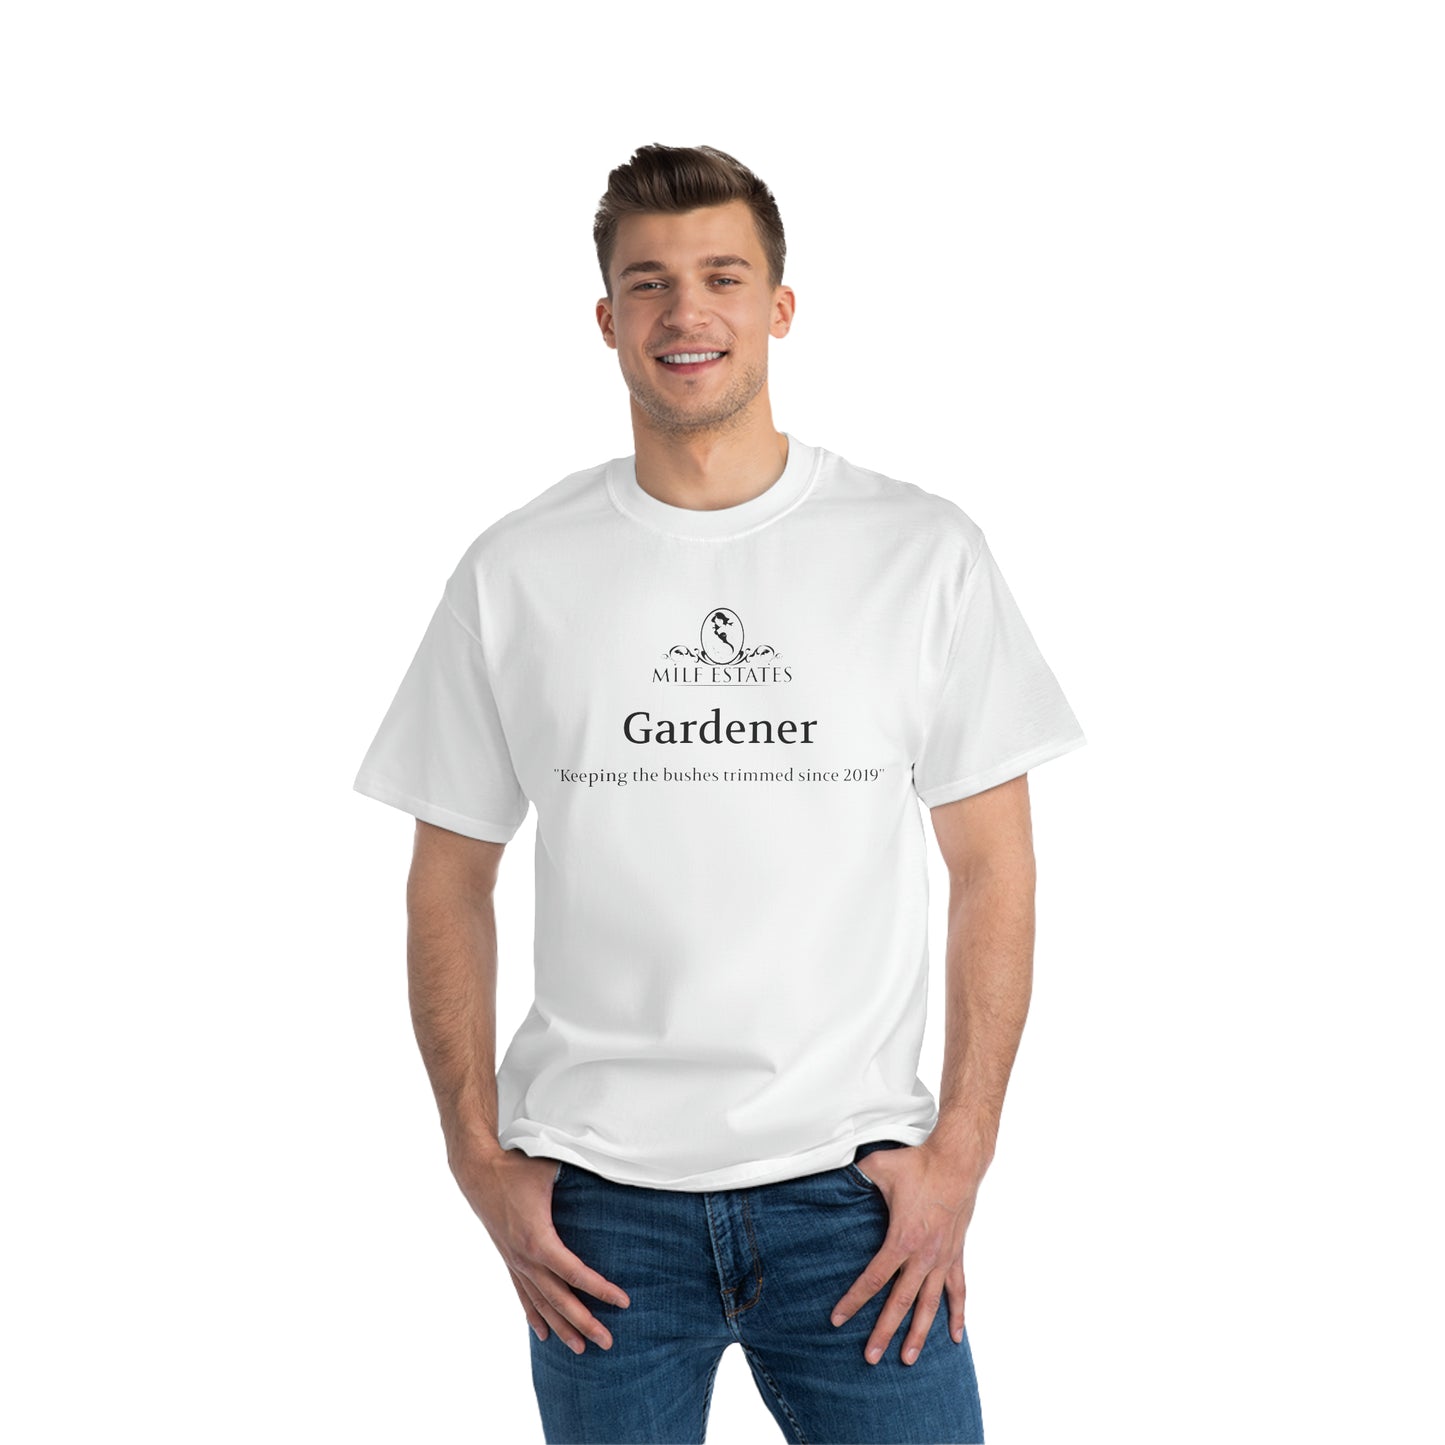 MILF ESTATES Gardener (logo)